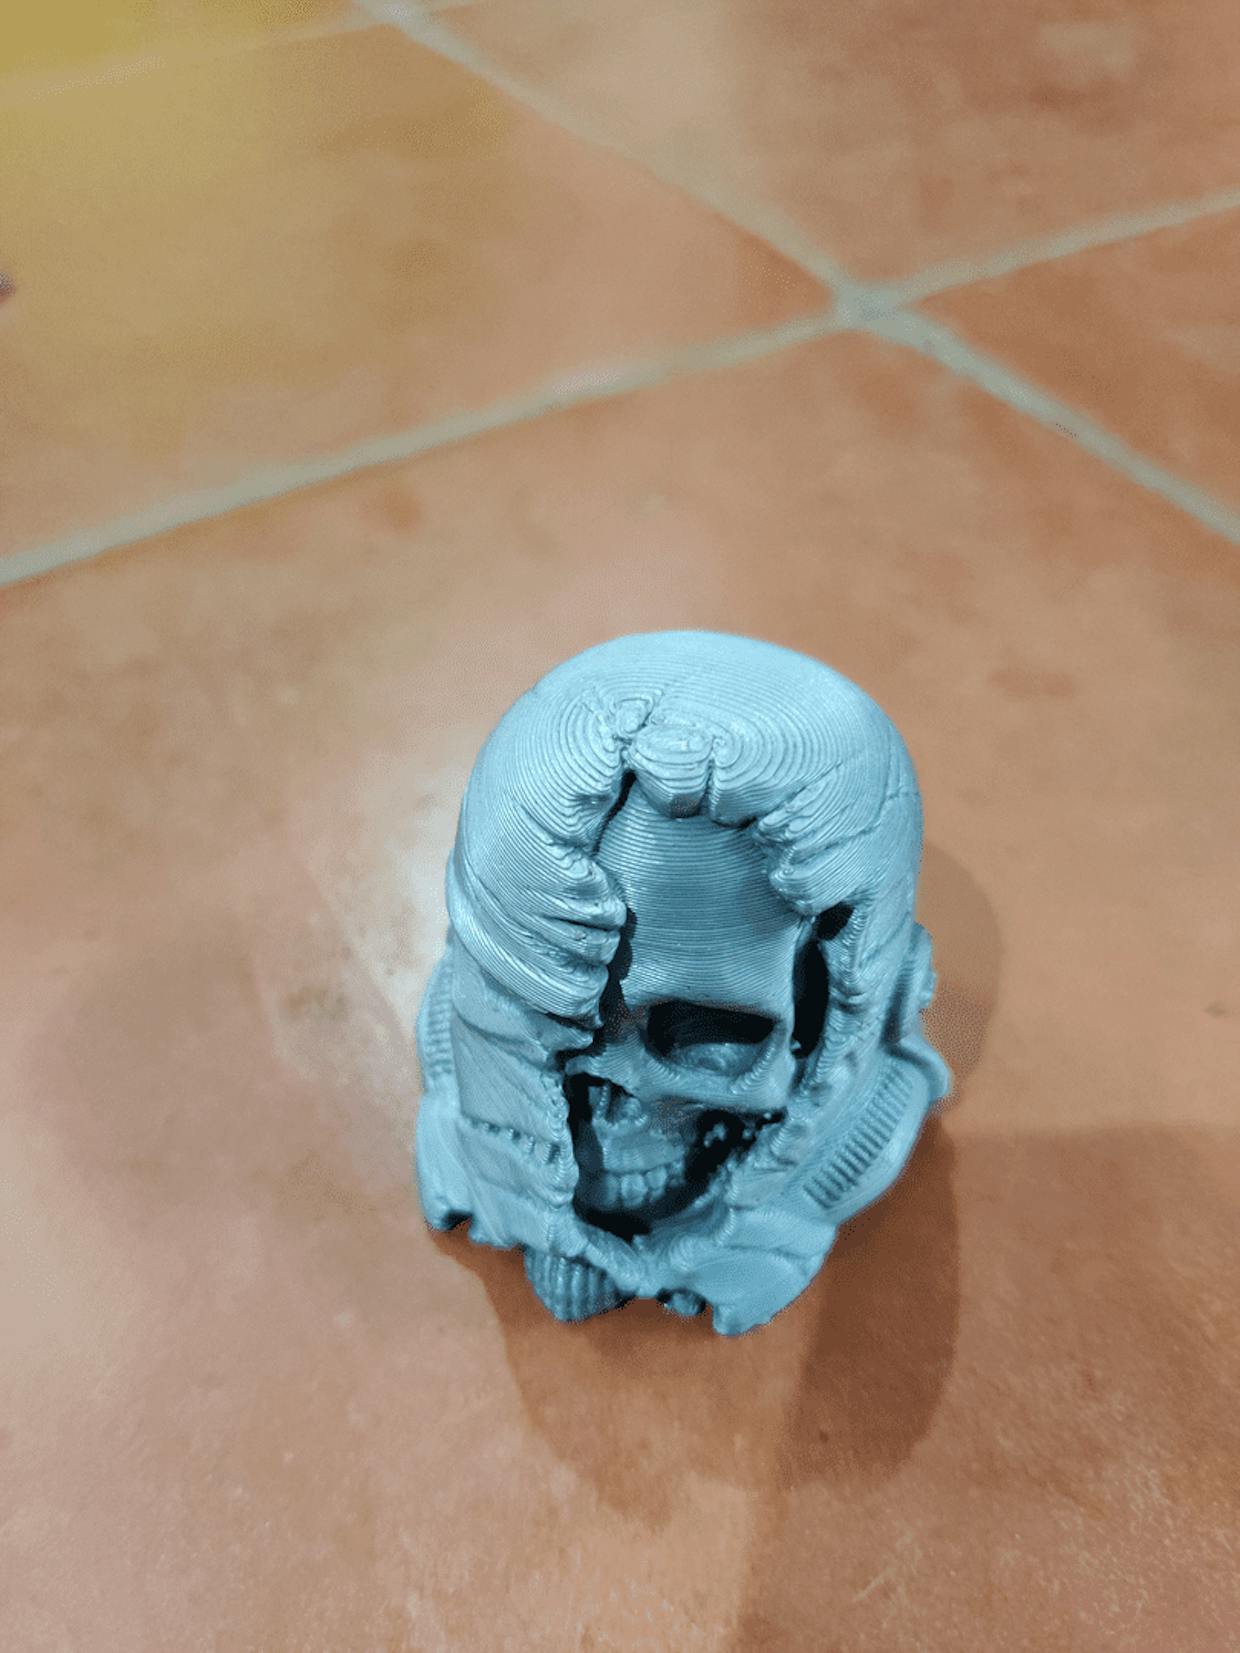 Killer 3D print - StormTrooper meets Skeletor